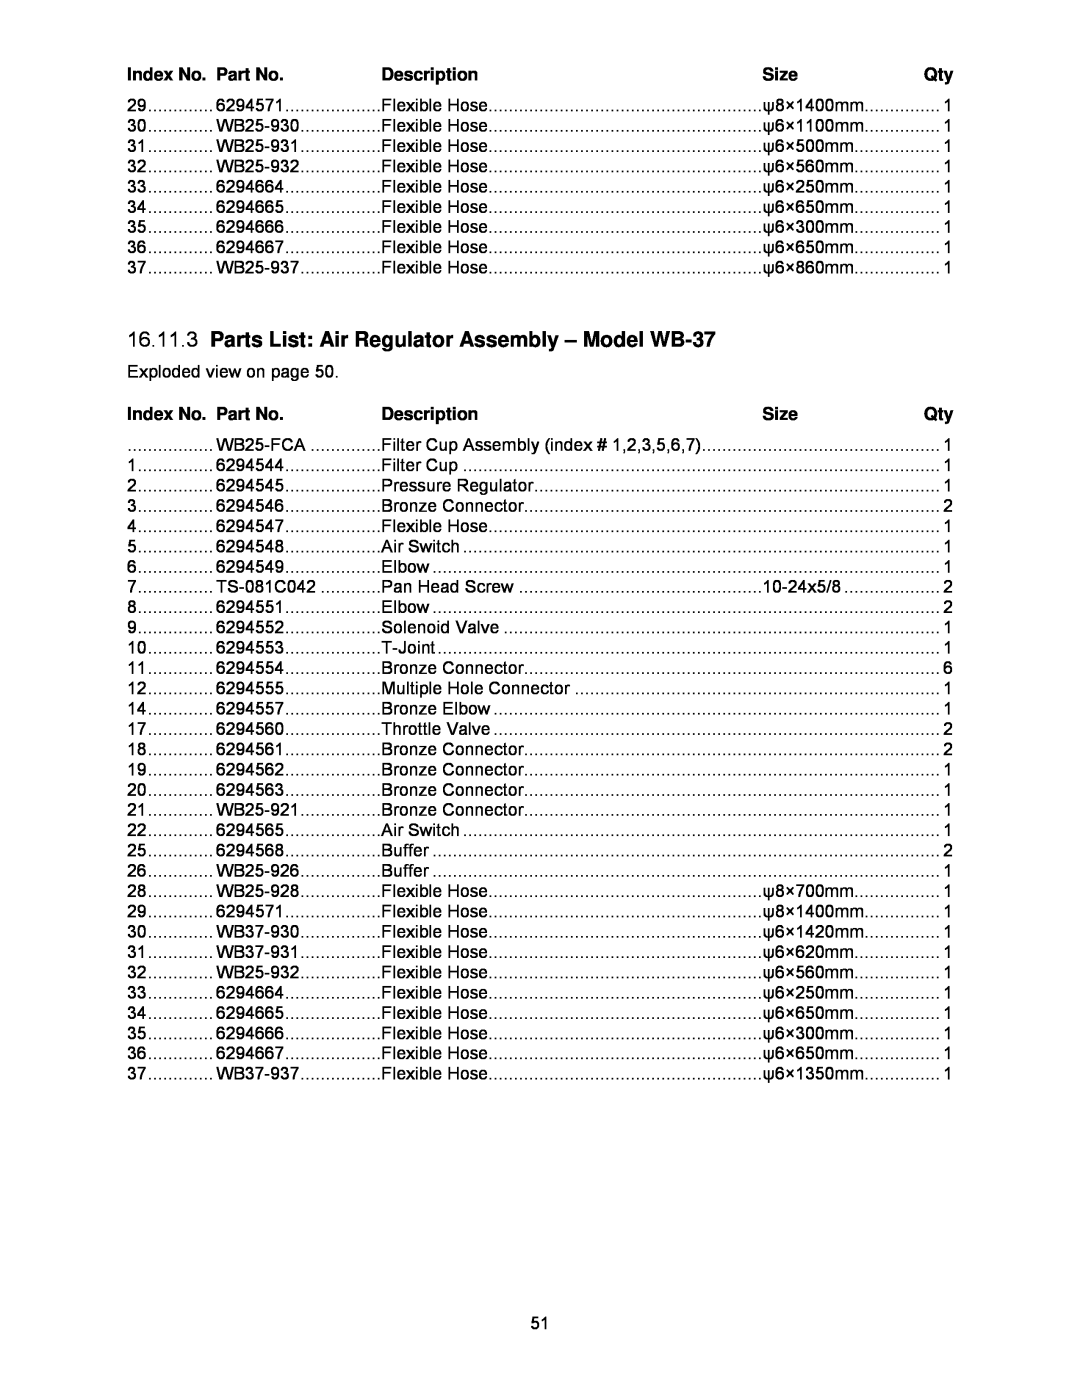 Powermatic WB-25, WB-43 Parts List Air Regulator Assembly - Model WB-37, Index No. Part No, Description, Size 